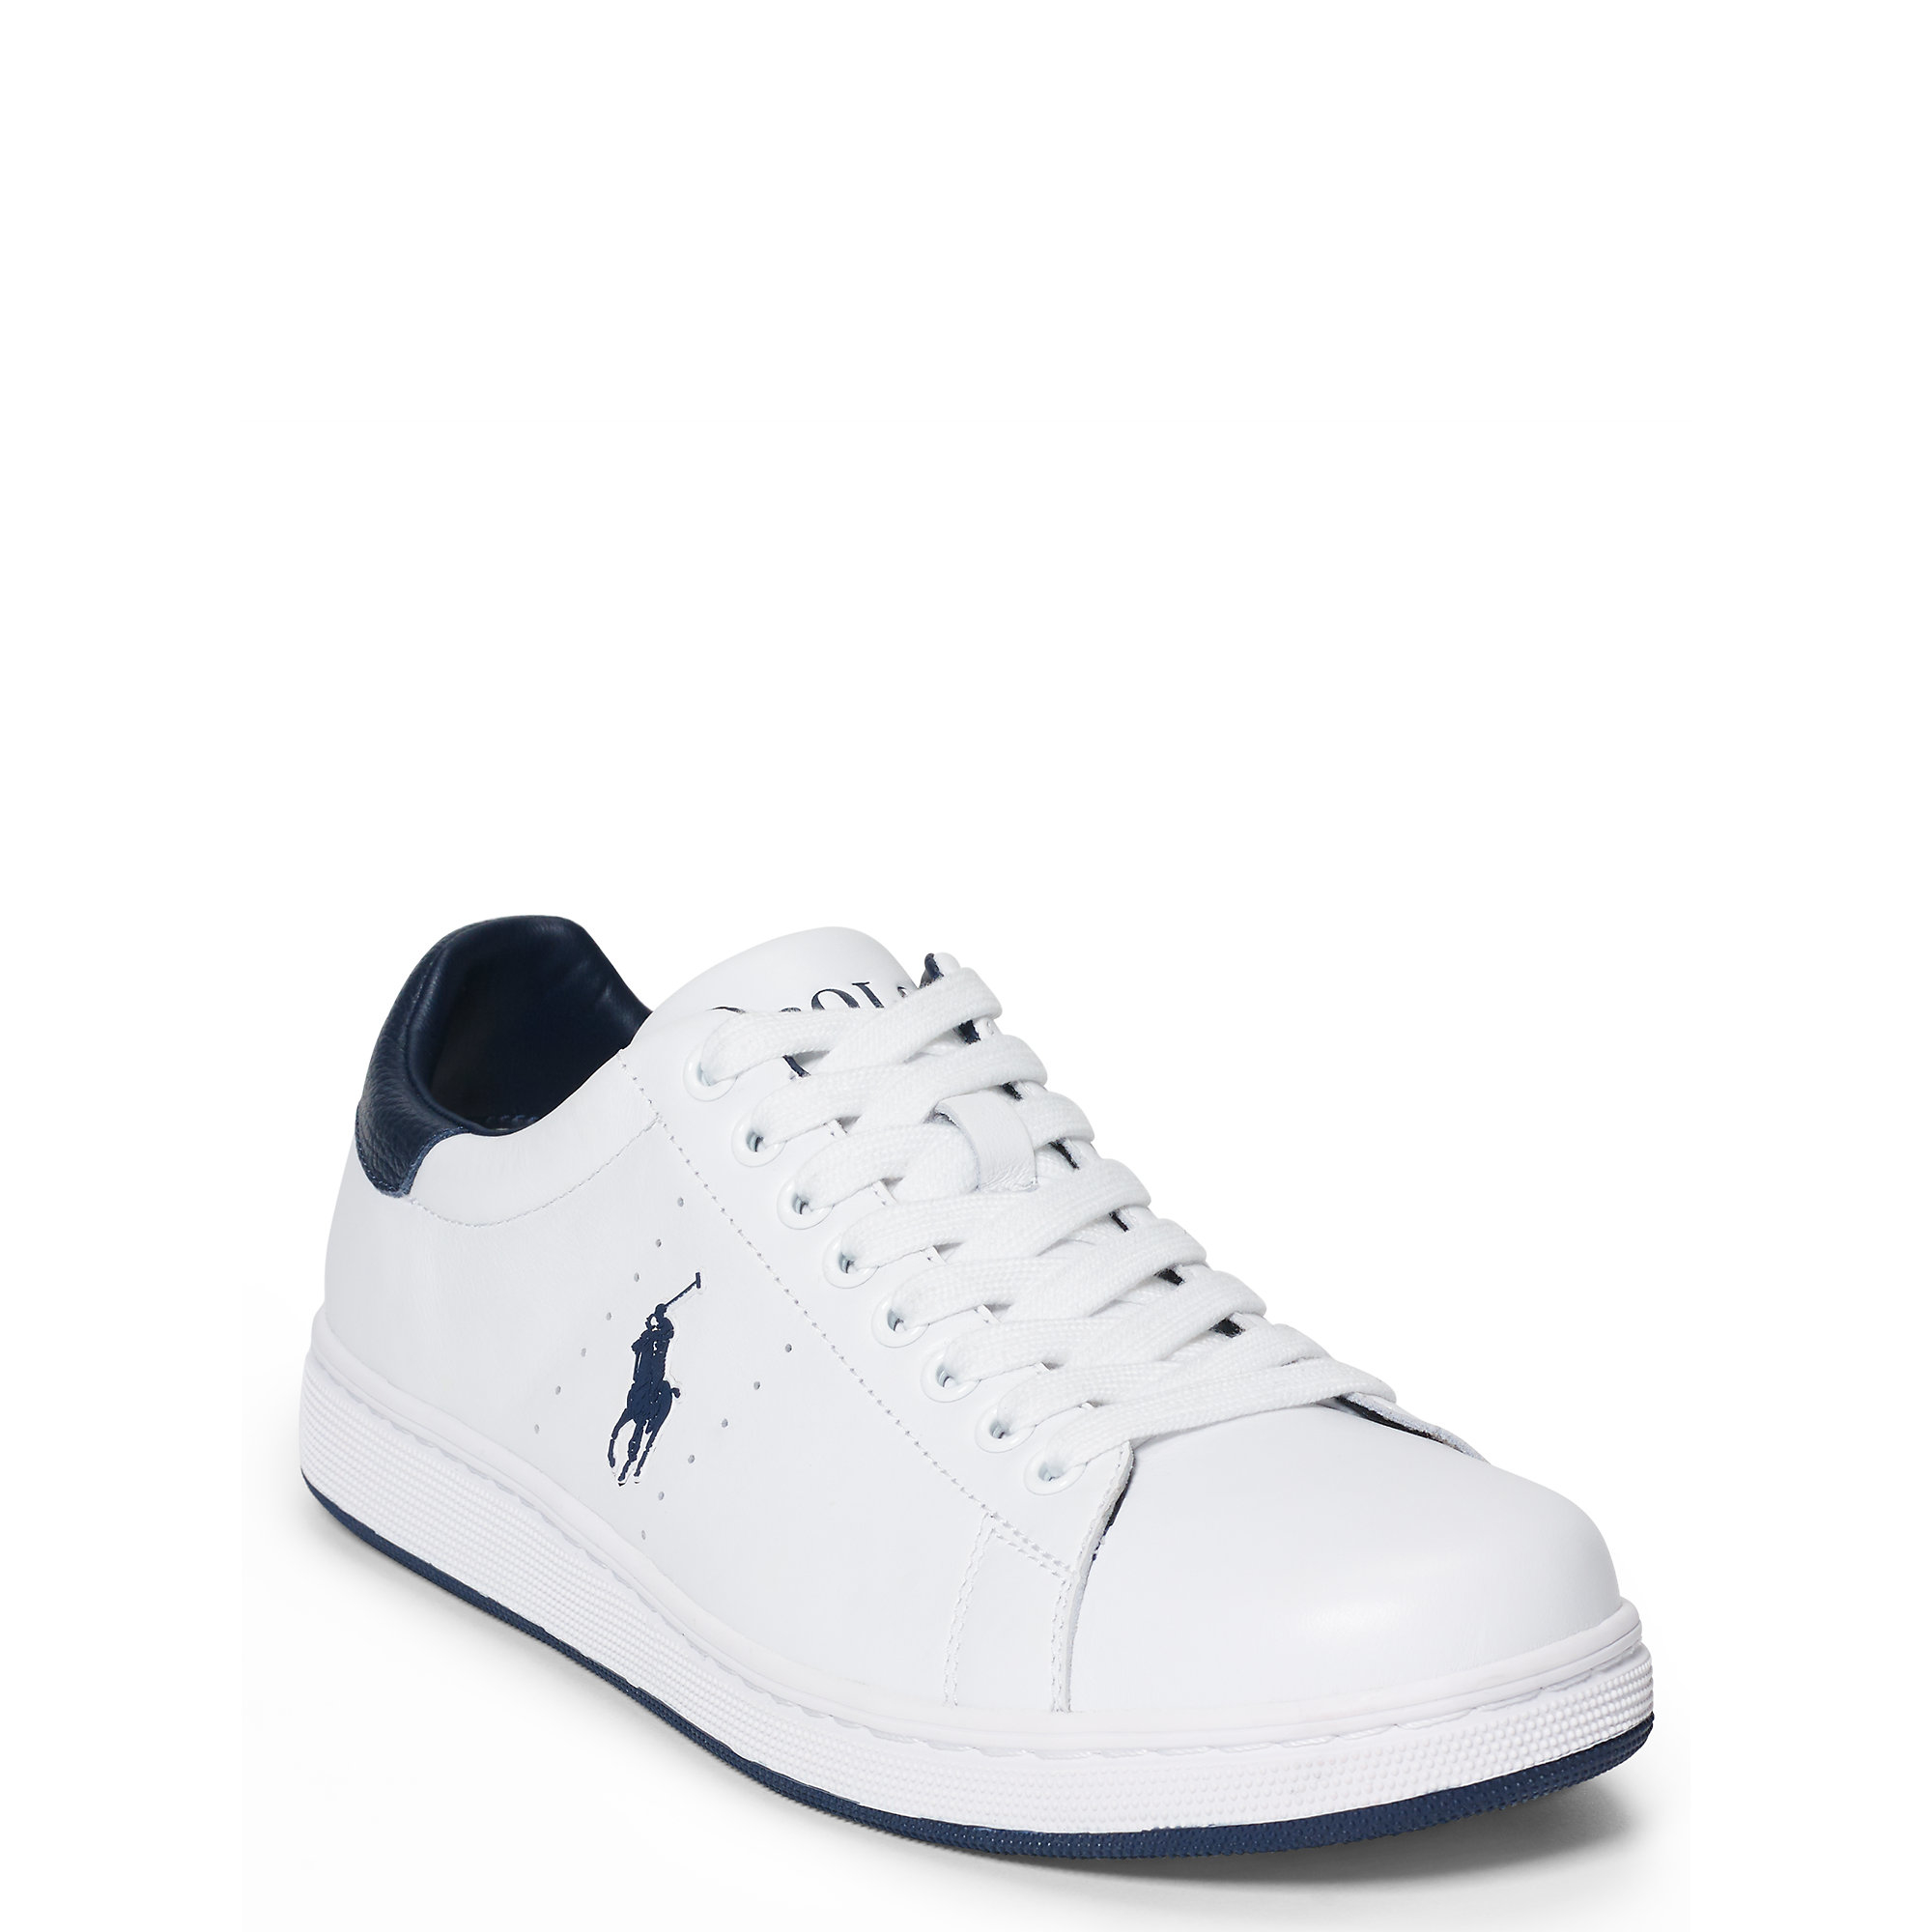 Polo Ralph Lauren Whickham Leather Sneaker in White for Men - Lyst